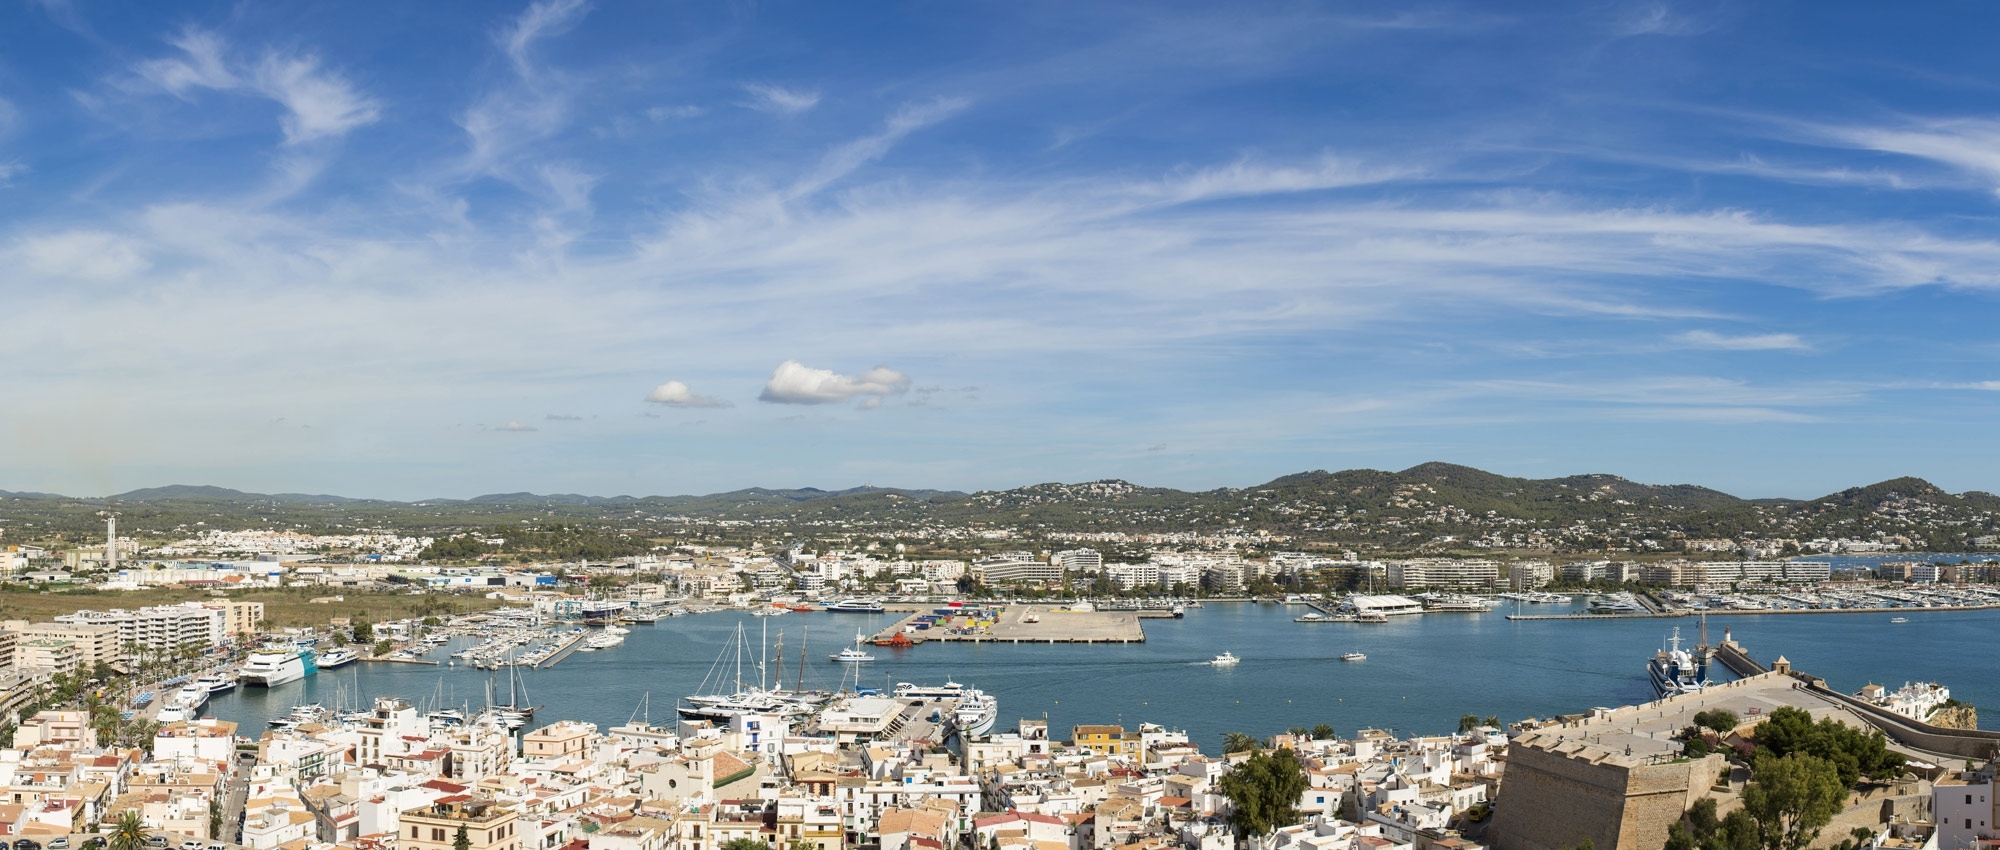 Luxury Car Rental in Ibiza